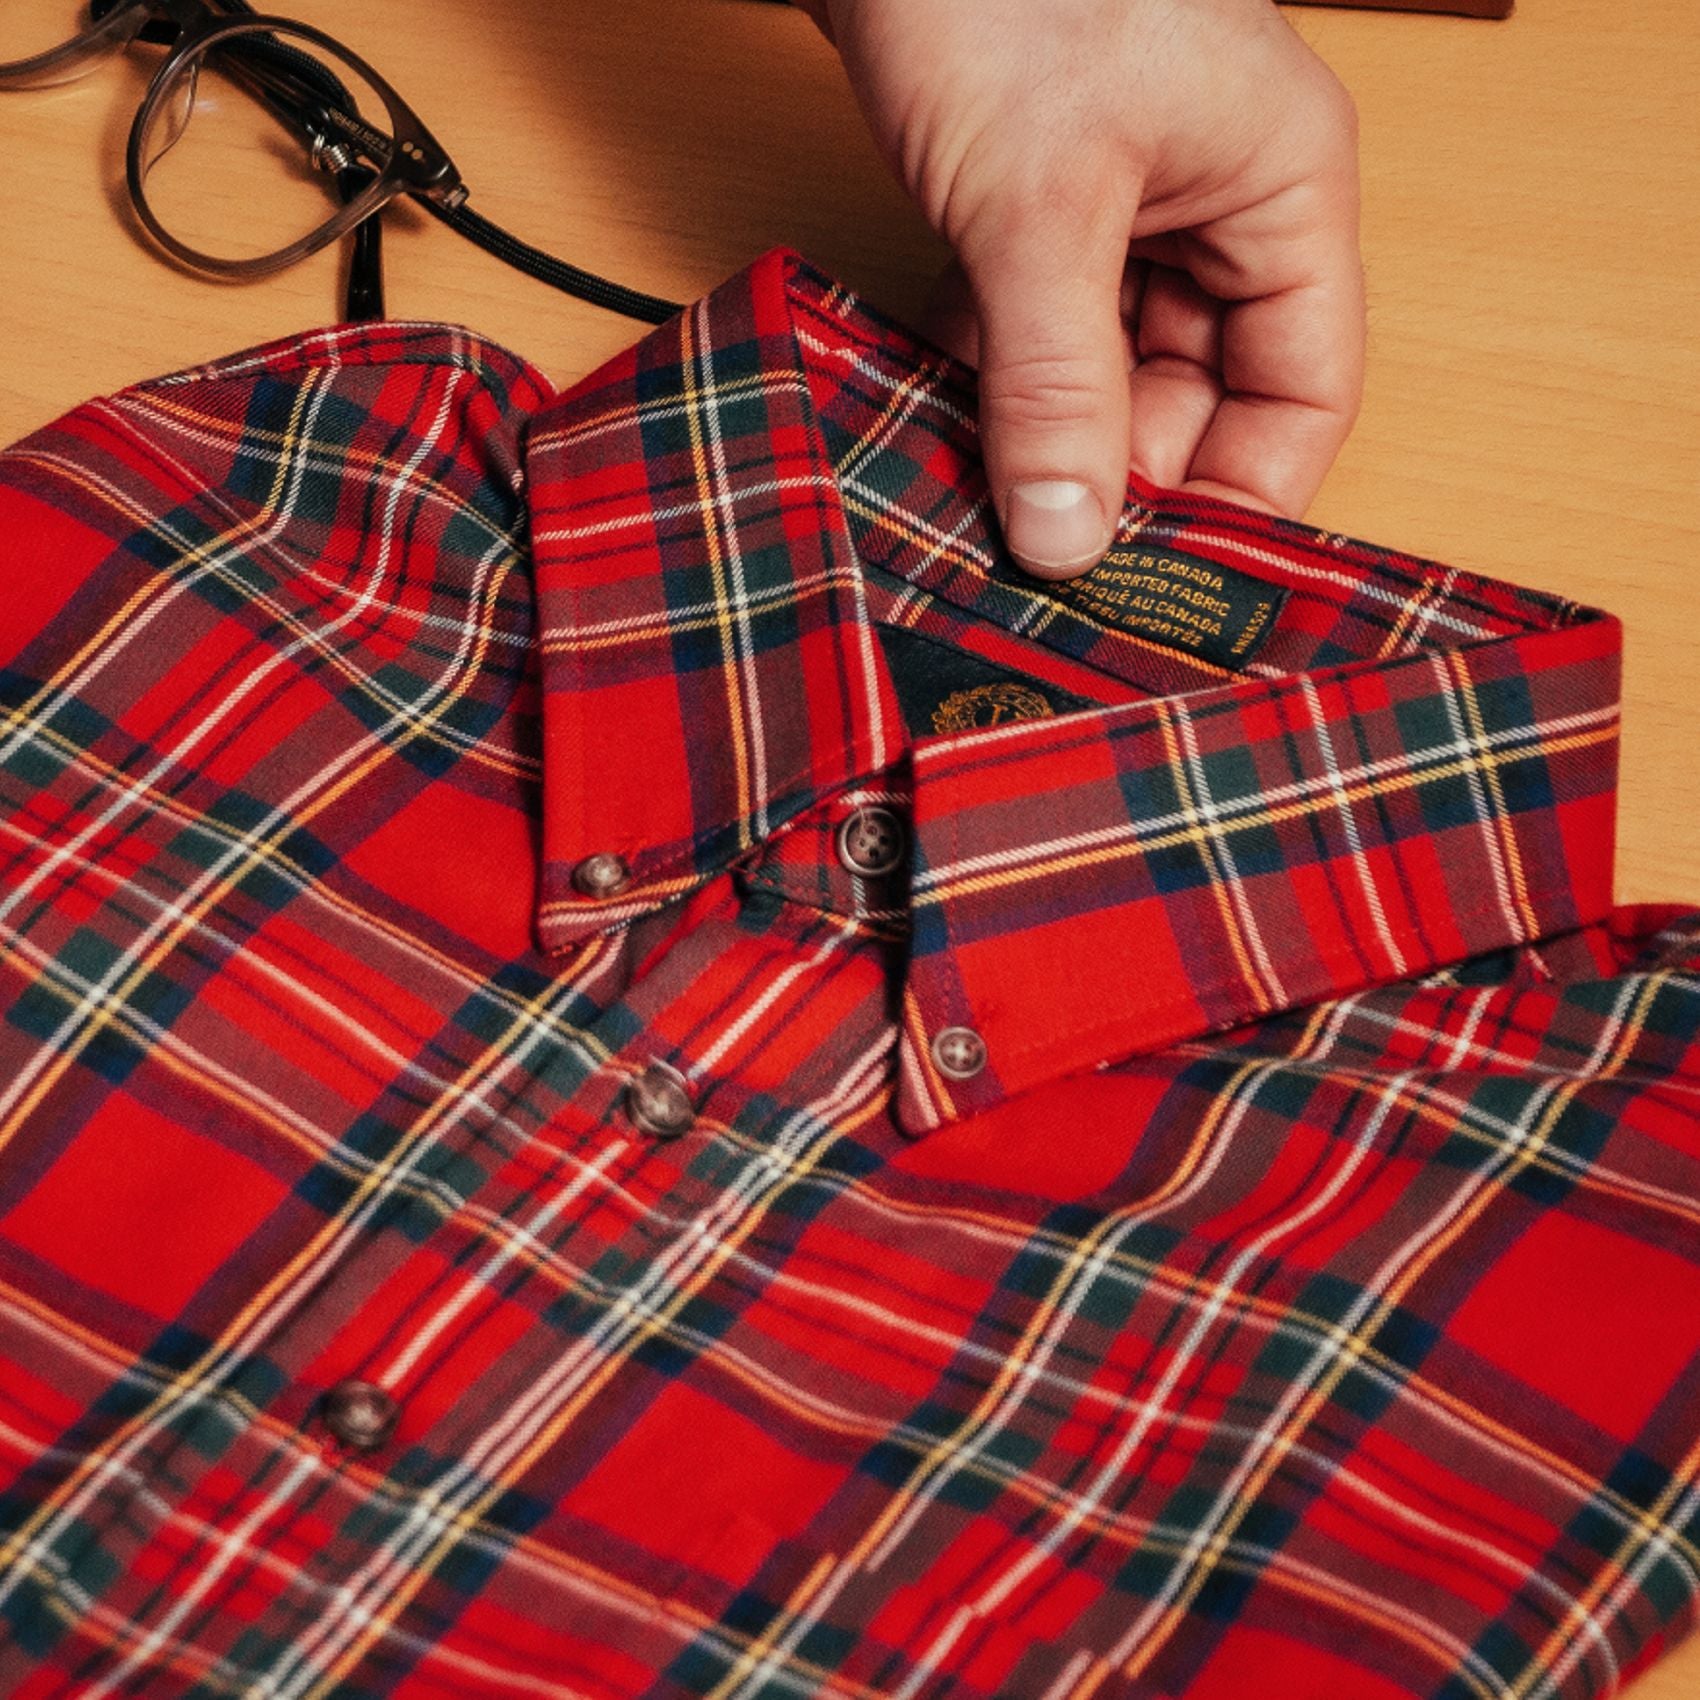 Royal Stewart Tartan Cotton and Wool Blend Button-Down Shirt by Viyella